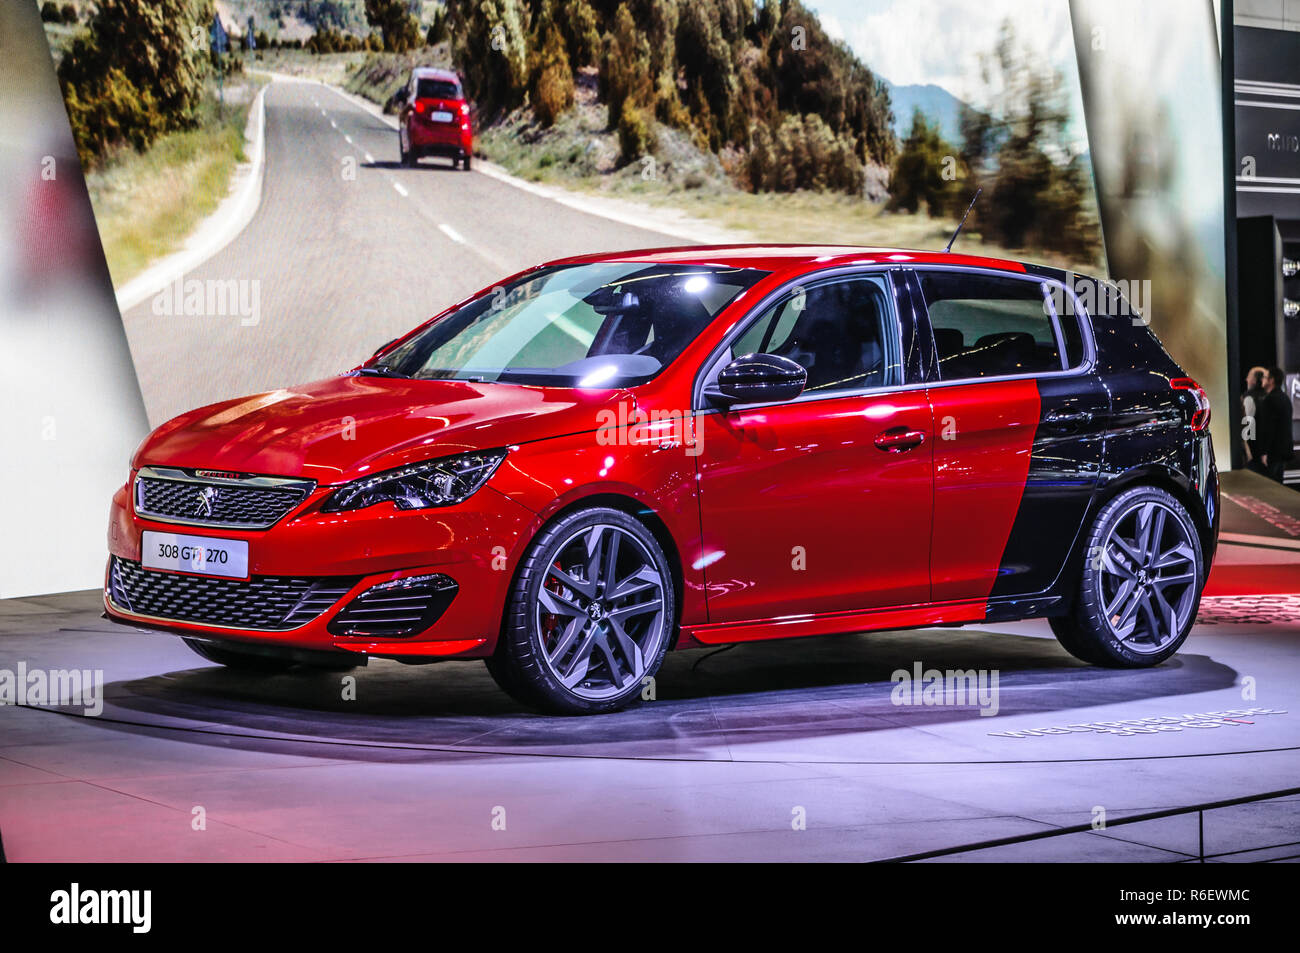 Peugeot 308 gti -Fotos und -Bildmaterial in hoher Auflösung – Alamy